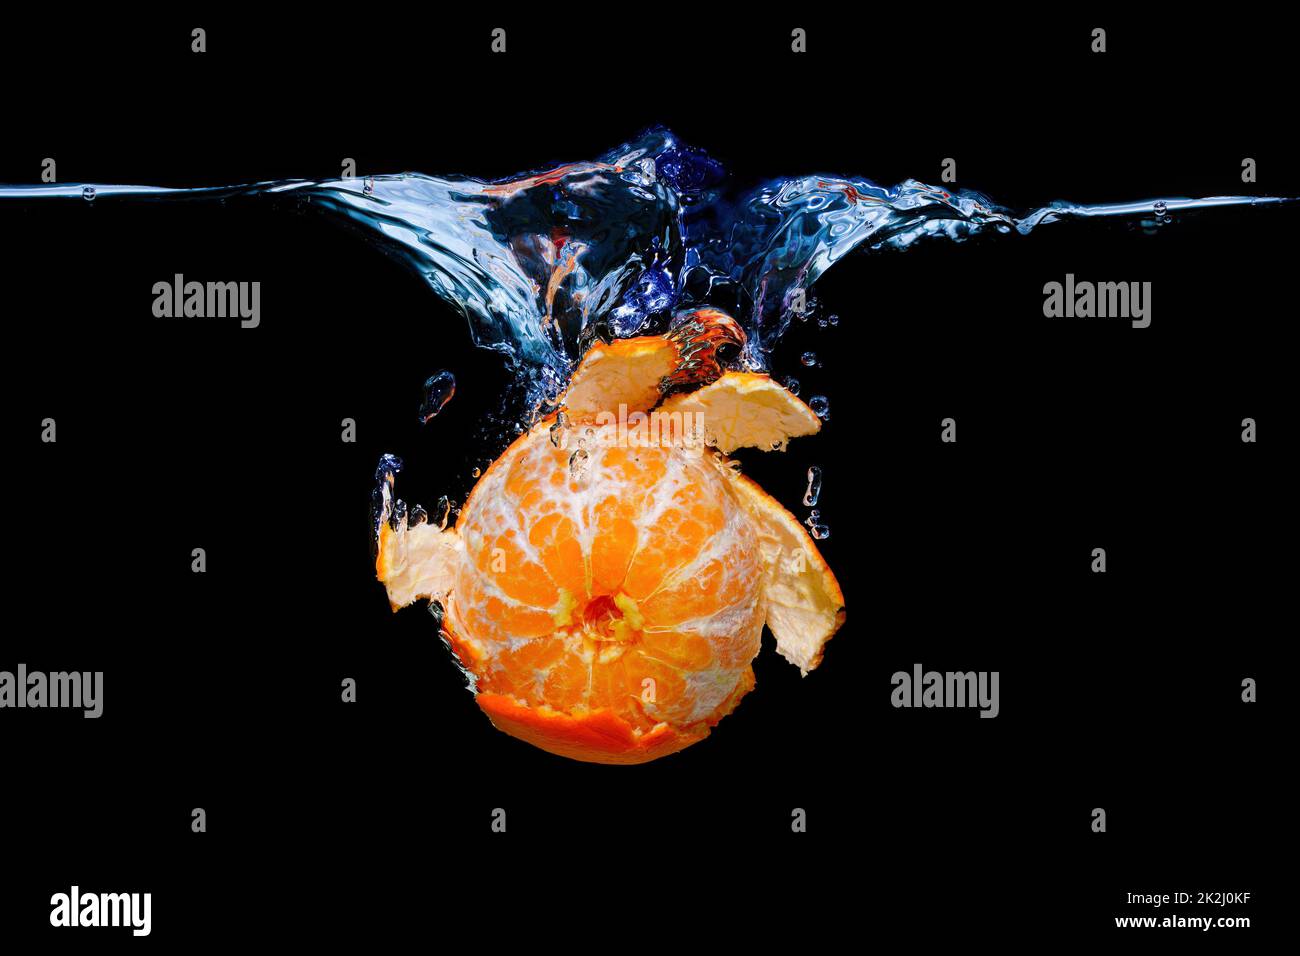 Close-up of a peeled tangerine sinking underwater with splashes isolated on black background. Stock Photo